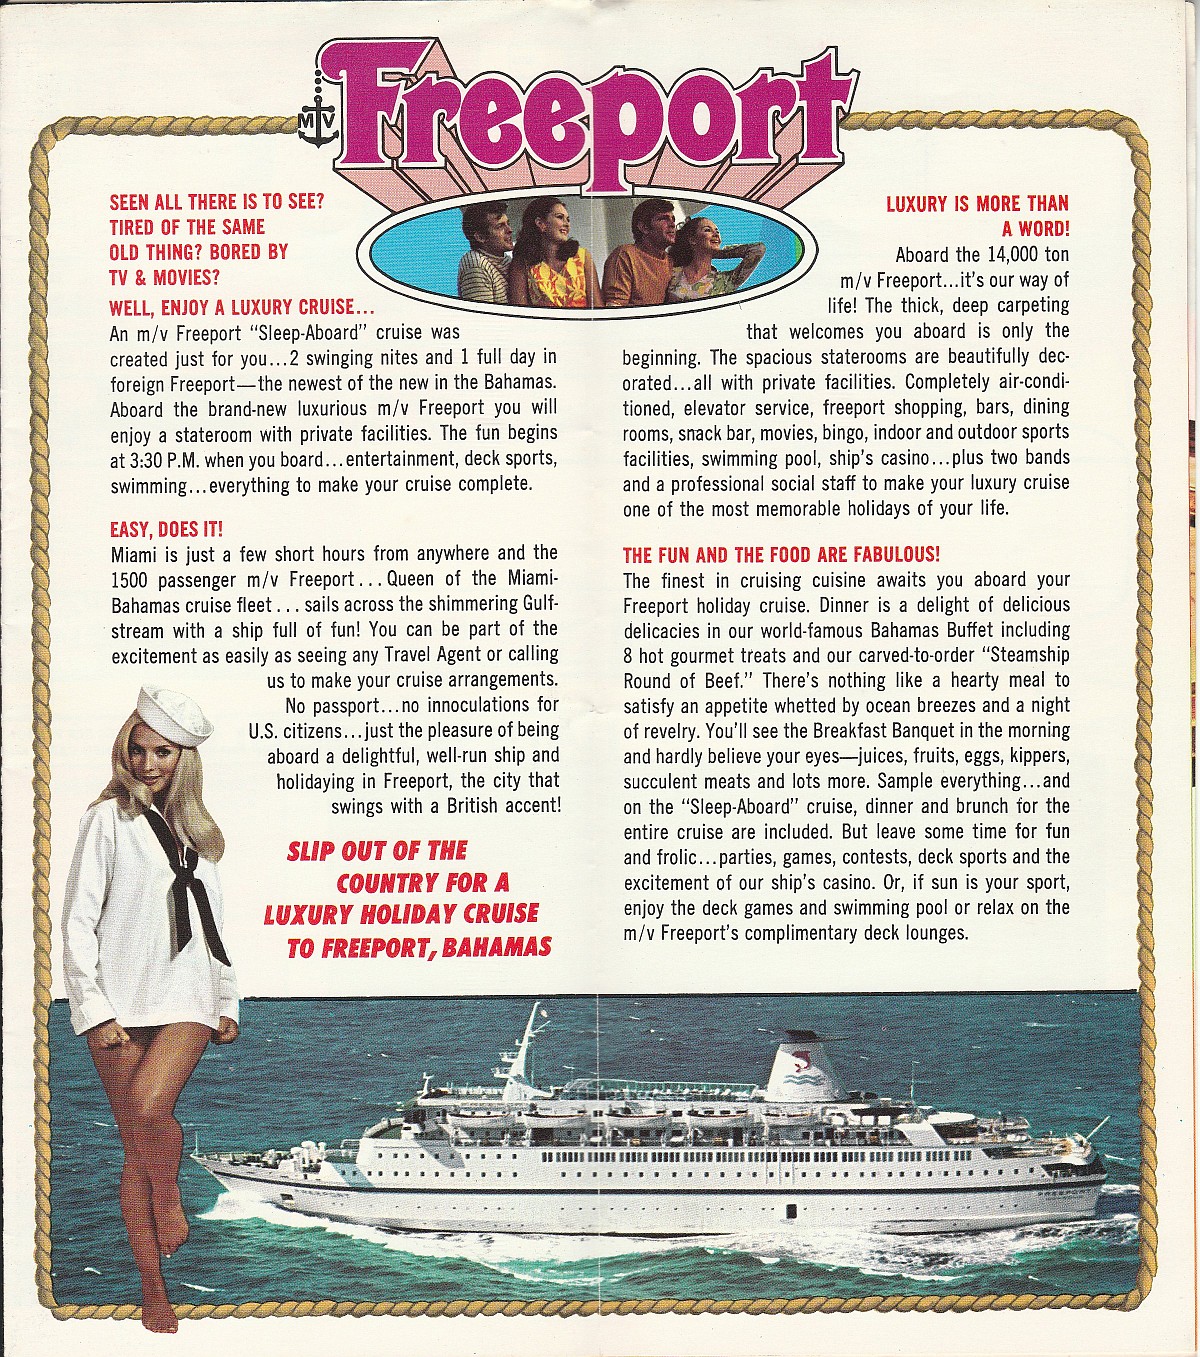 mv Freeport Enjoy a luxury cruise: An m/v Freeport "Sleep-Aboard" cruise was created just for you